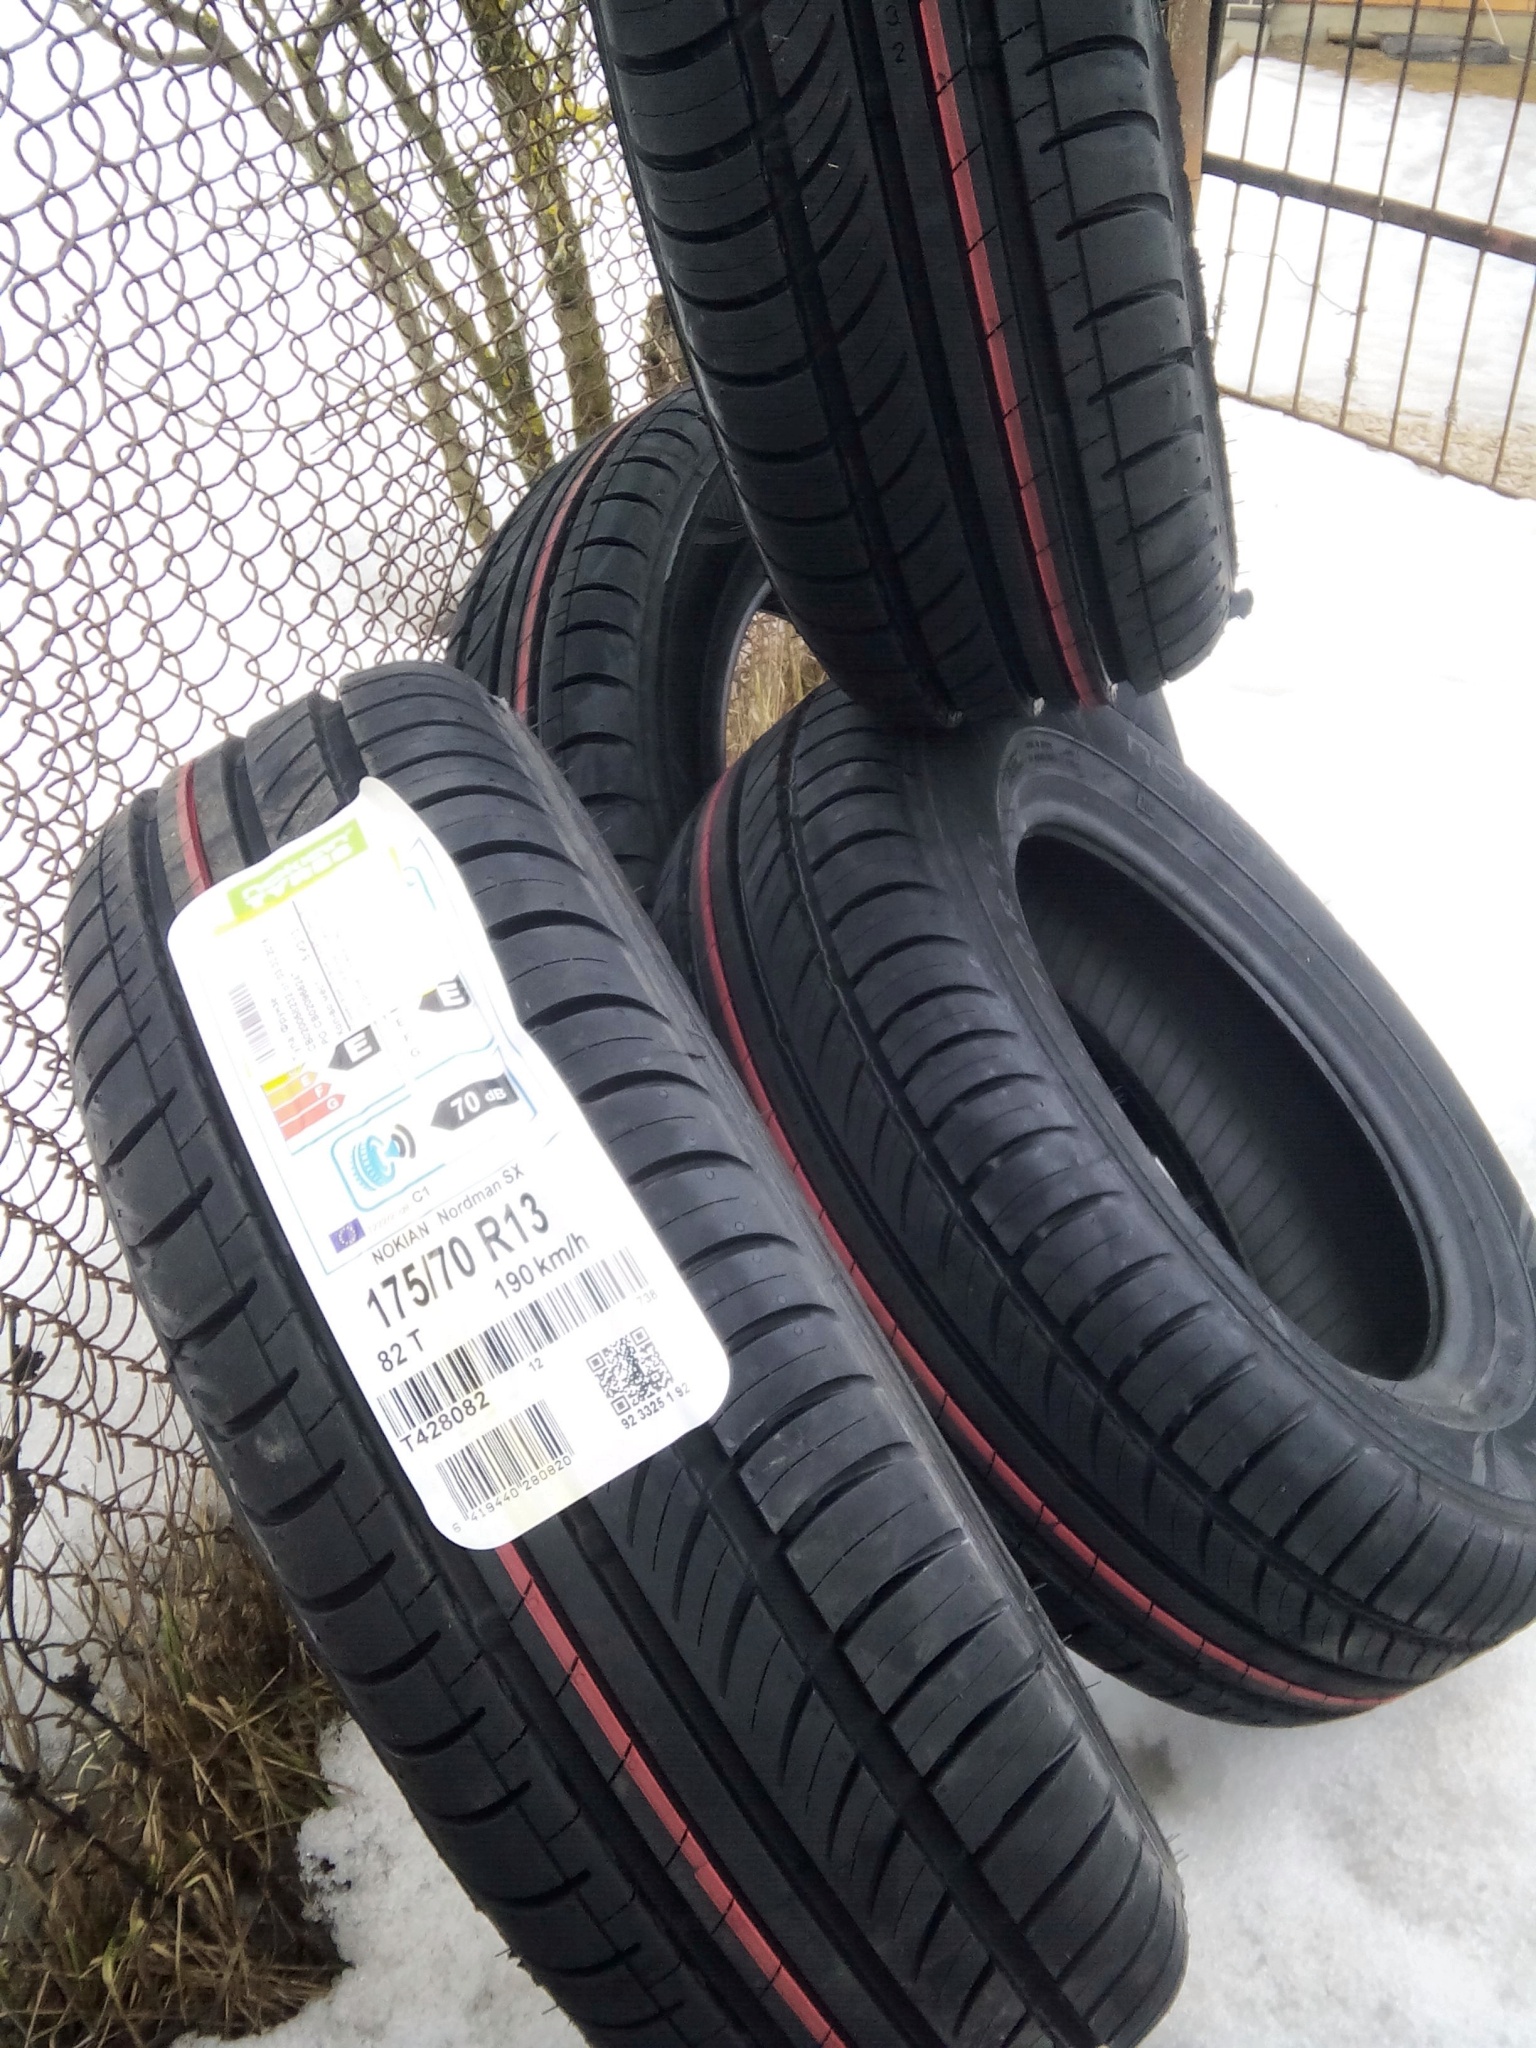 Nokian tyres nordman sx2 отзывы